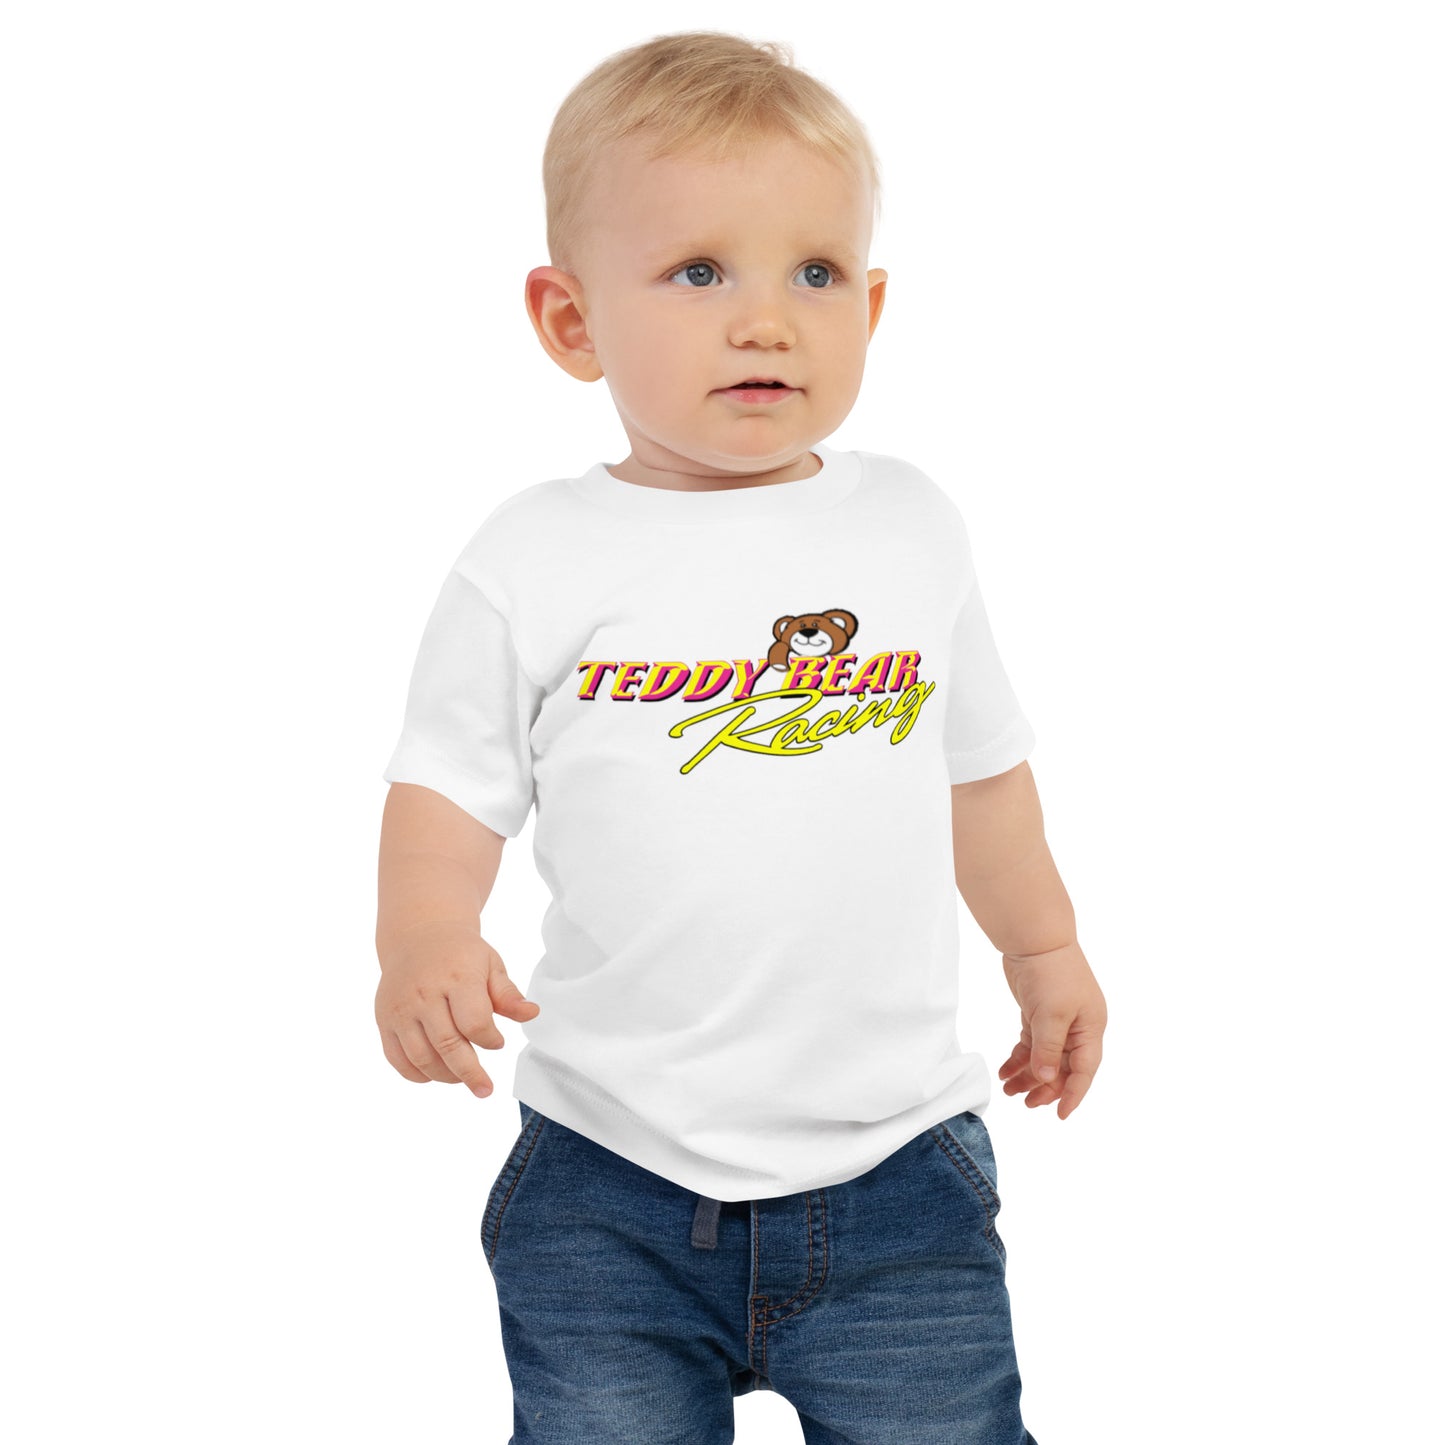 Josh King Teddy Bear Infant T-Shirt